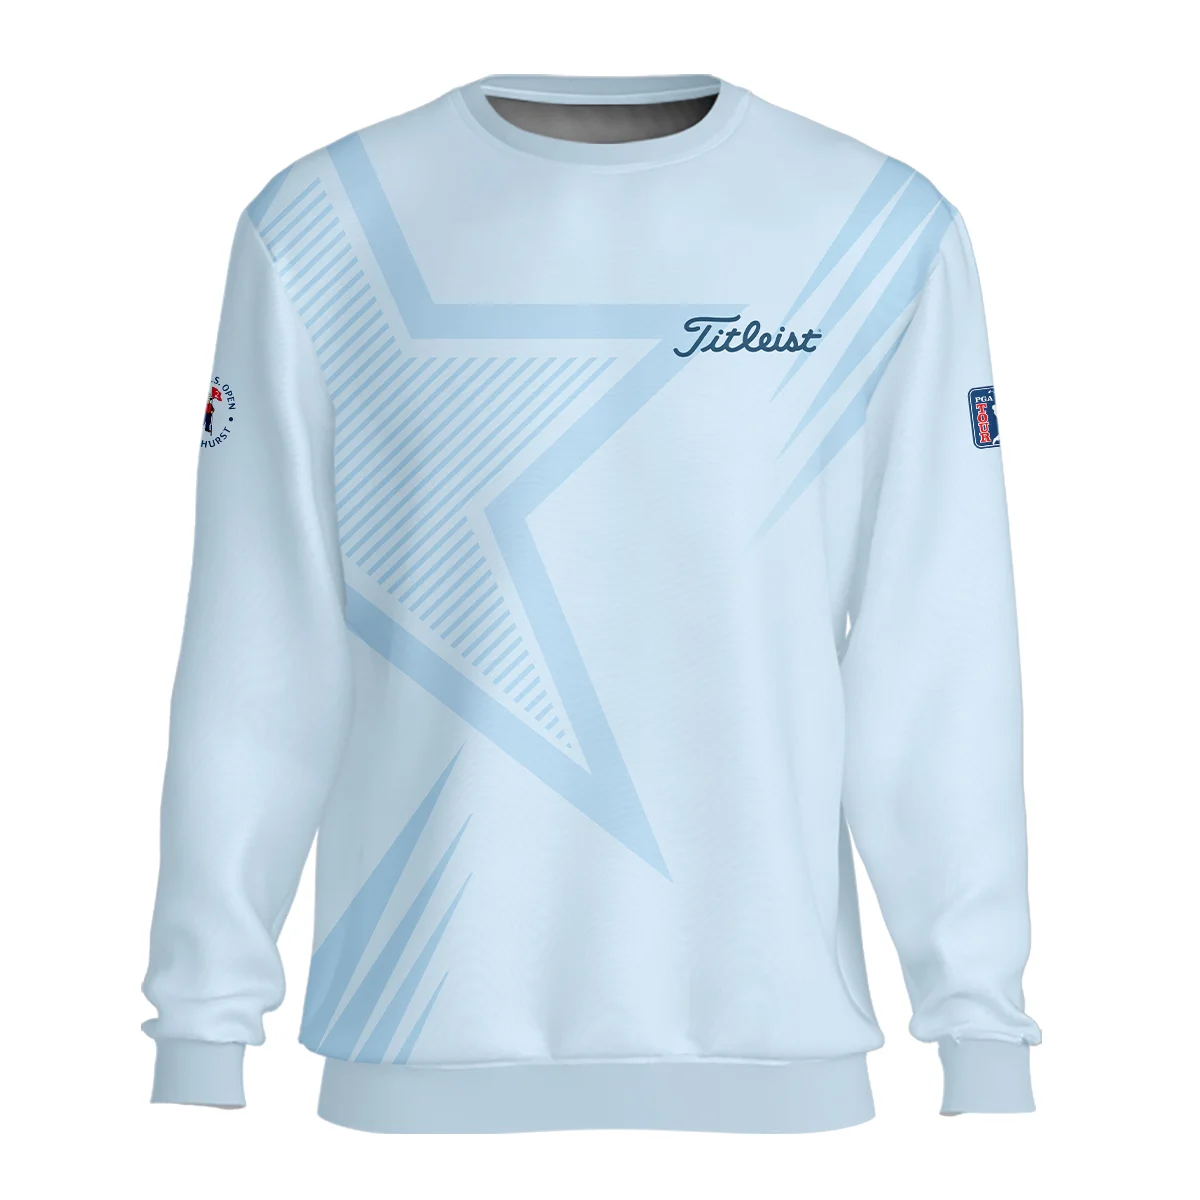 124th U.S. Open Pinehurst Golf Star Line Pattern Light Blue Titleist Style Classic, Short Sleeve Round Neck Polo Shirt